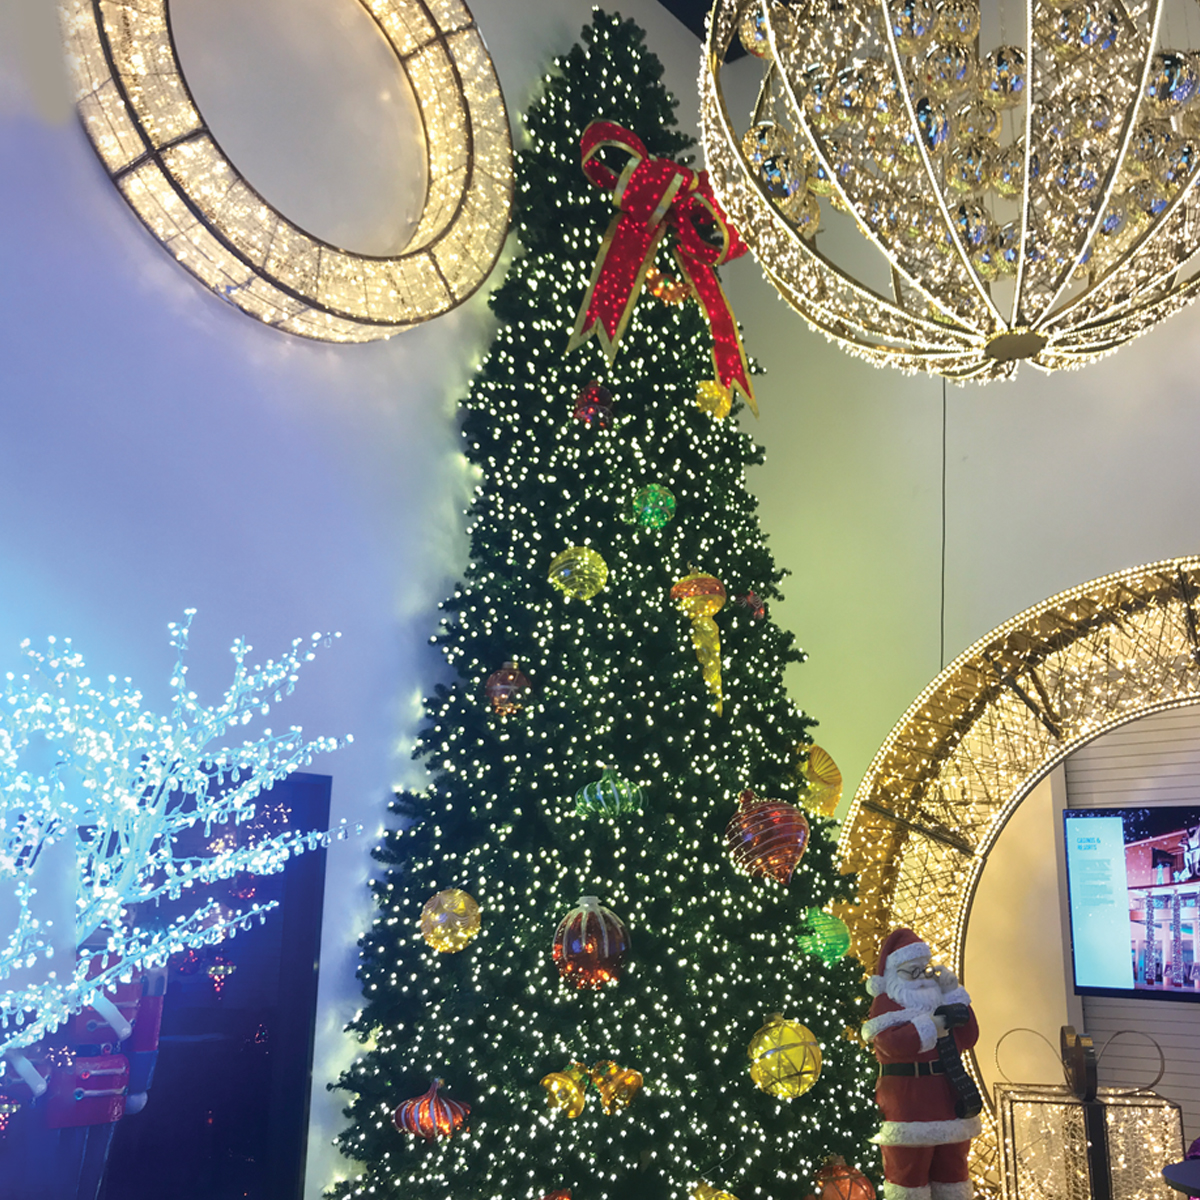 Breckenridge LED Christmas Tree - 18ft Tall - Commercial Christmas Display